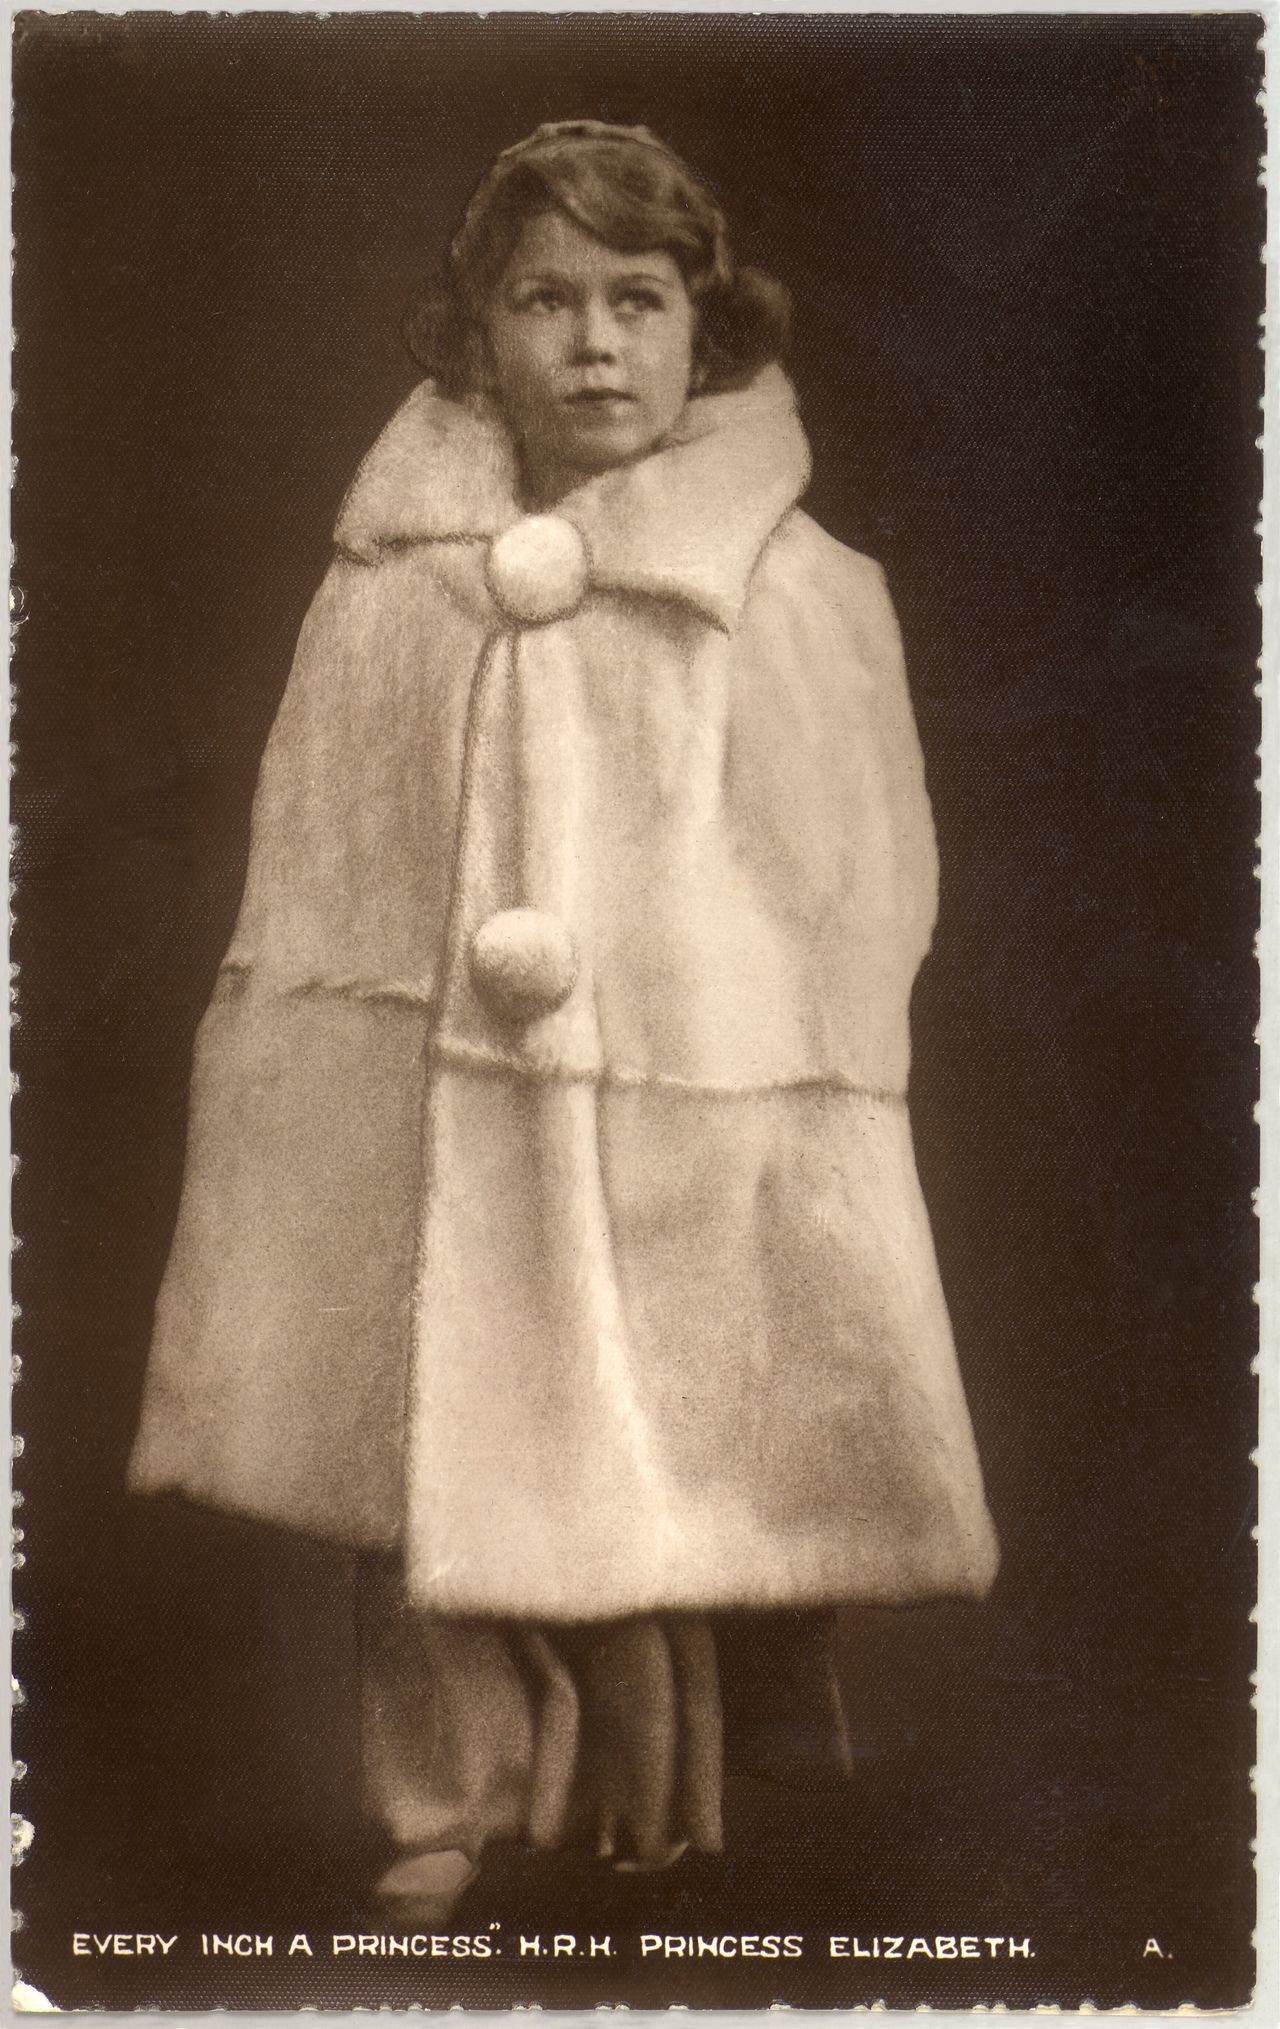 Princess Elizabeth in an elegant winter coat in a photo circa 1935.